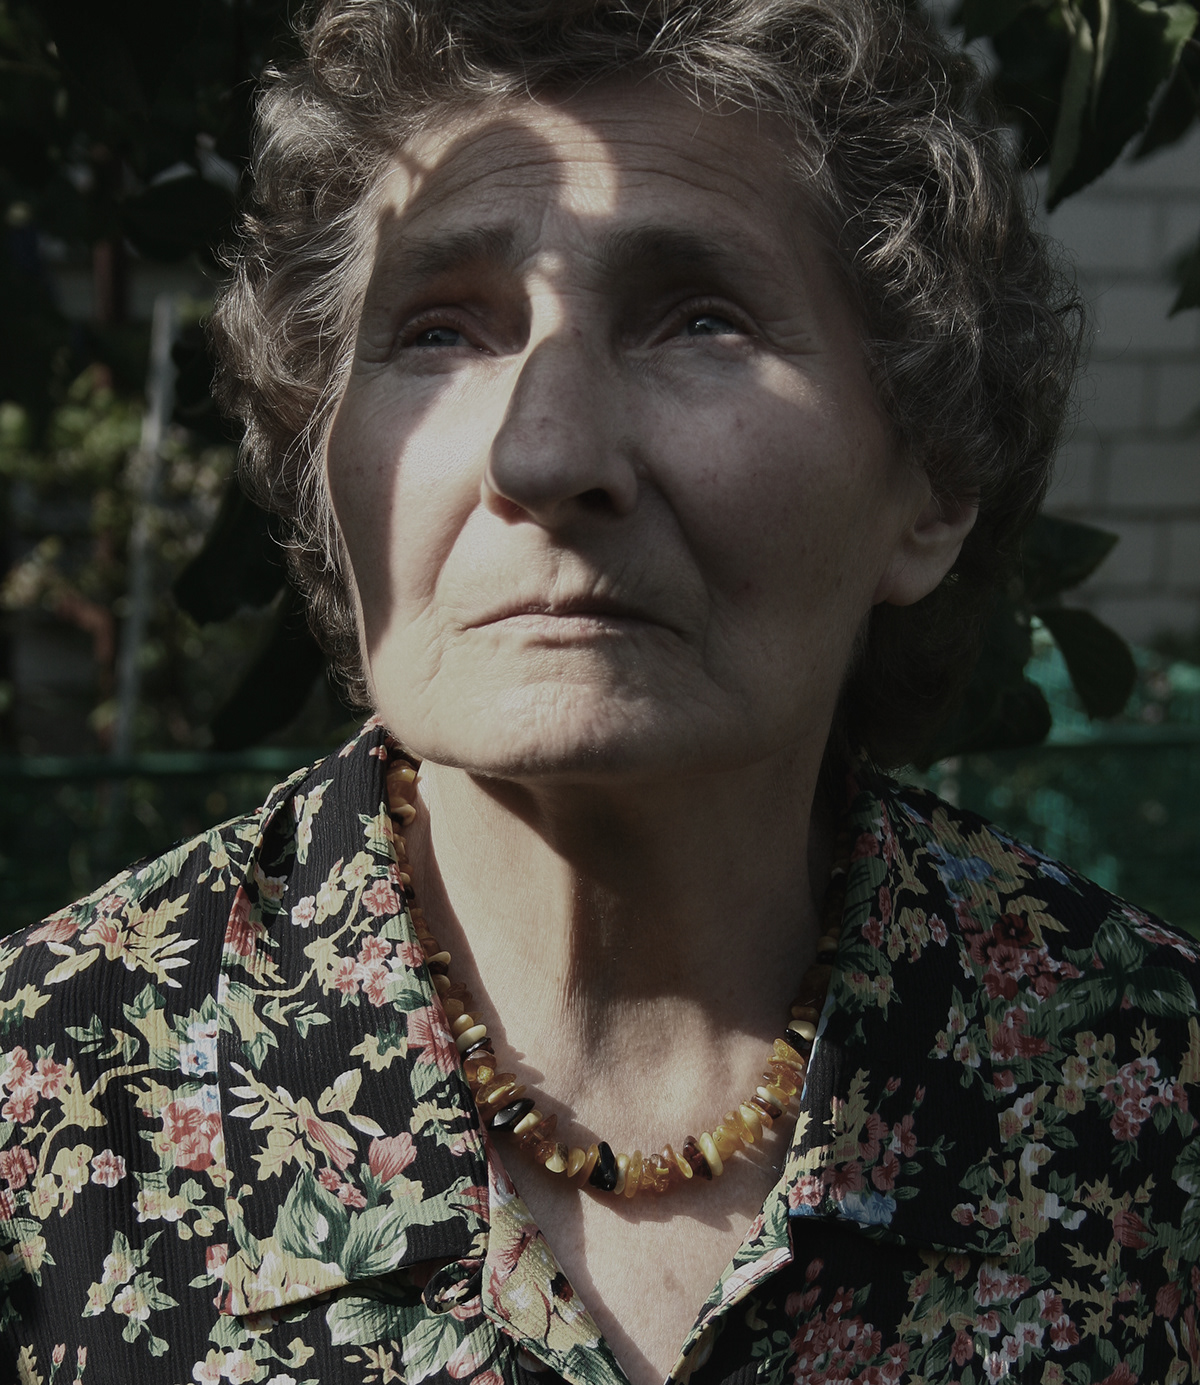 Sun woman Elderly eyes peace diginified reflection